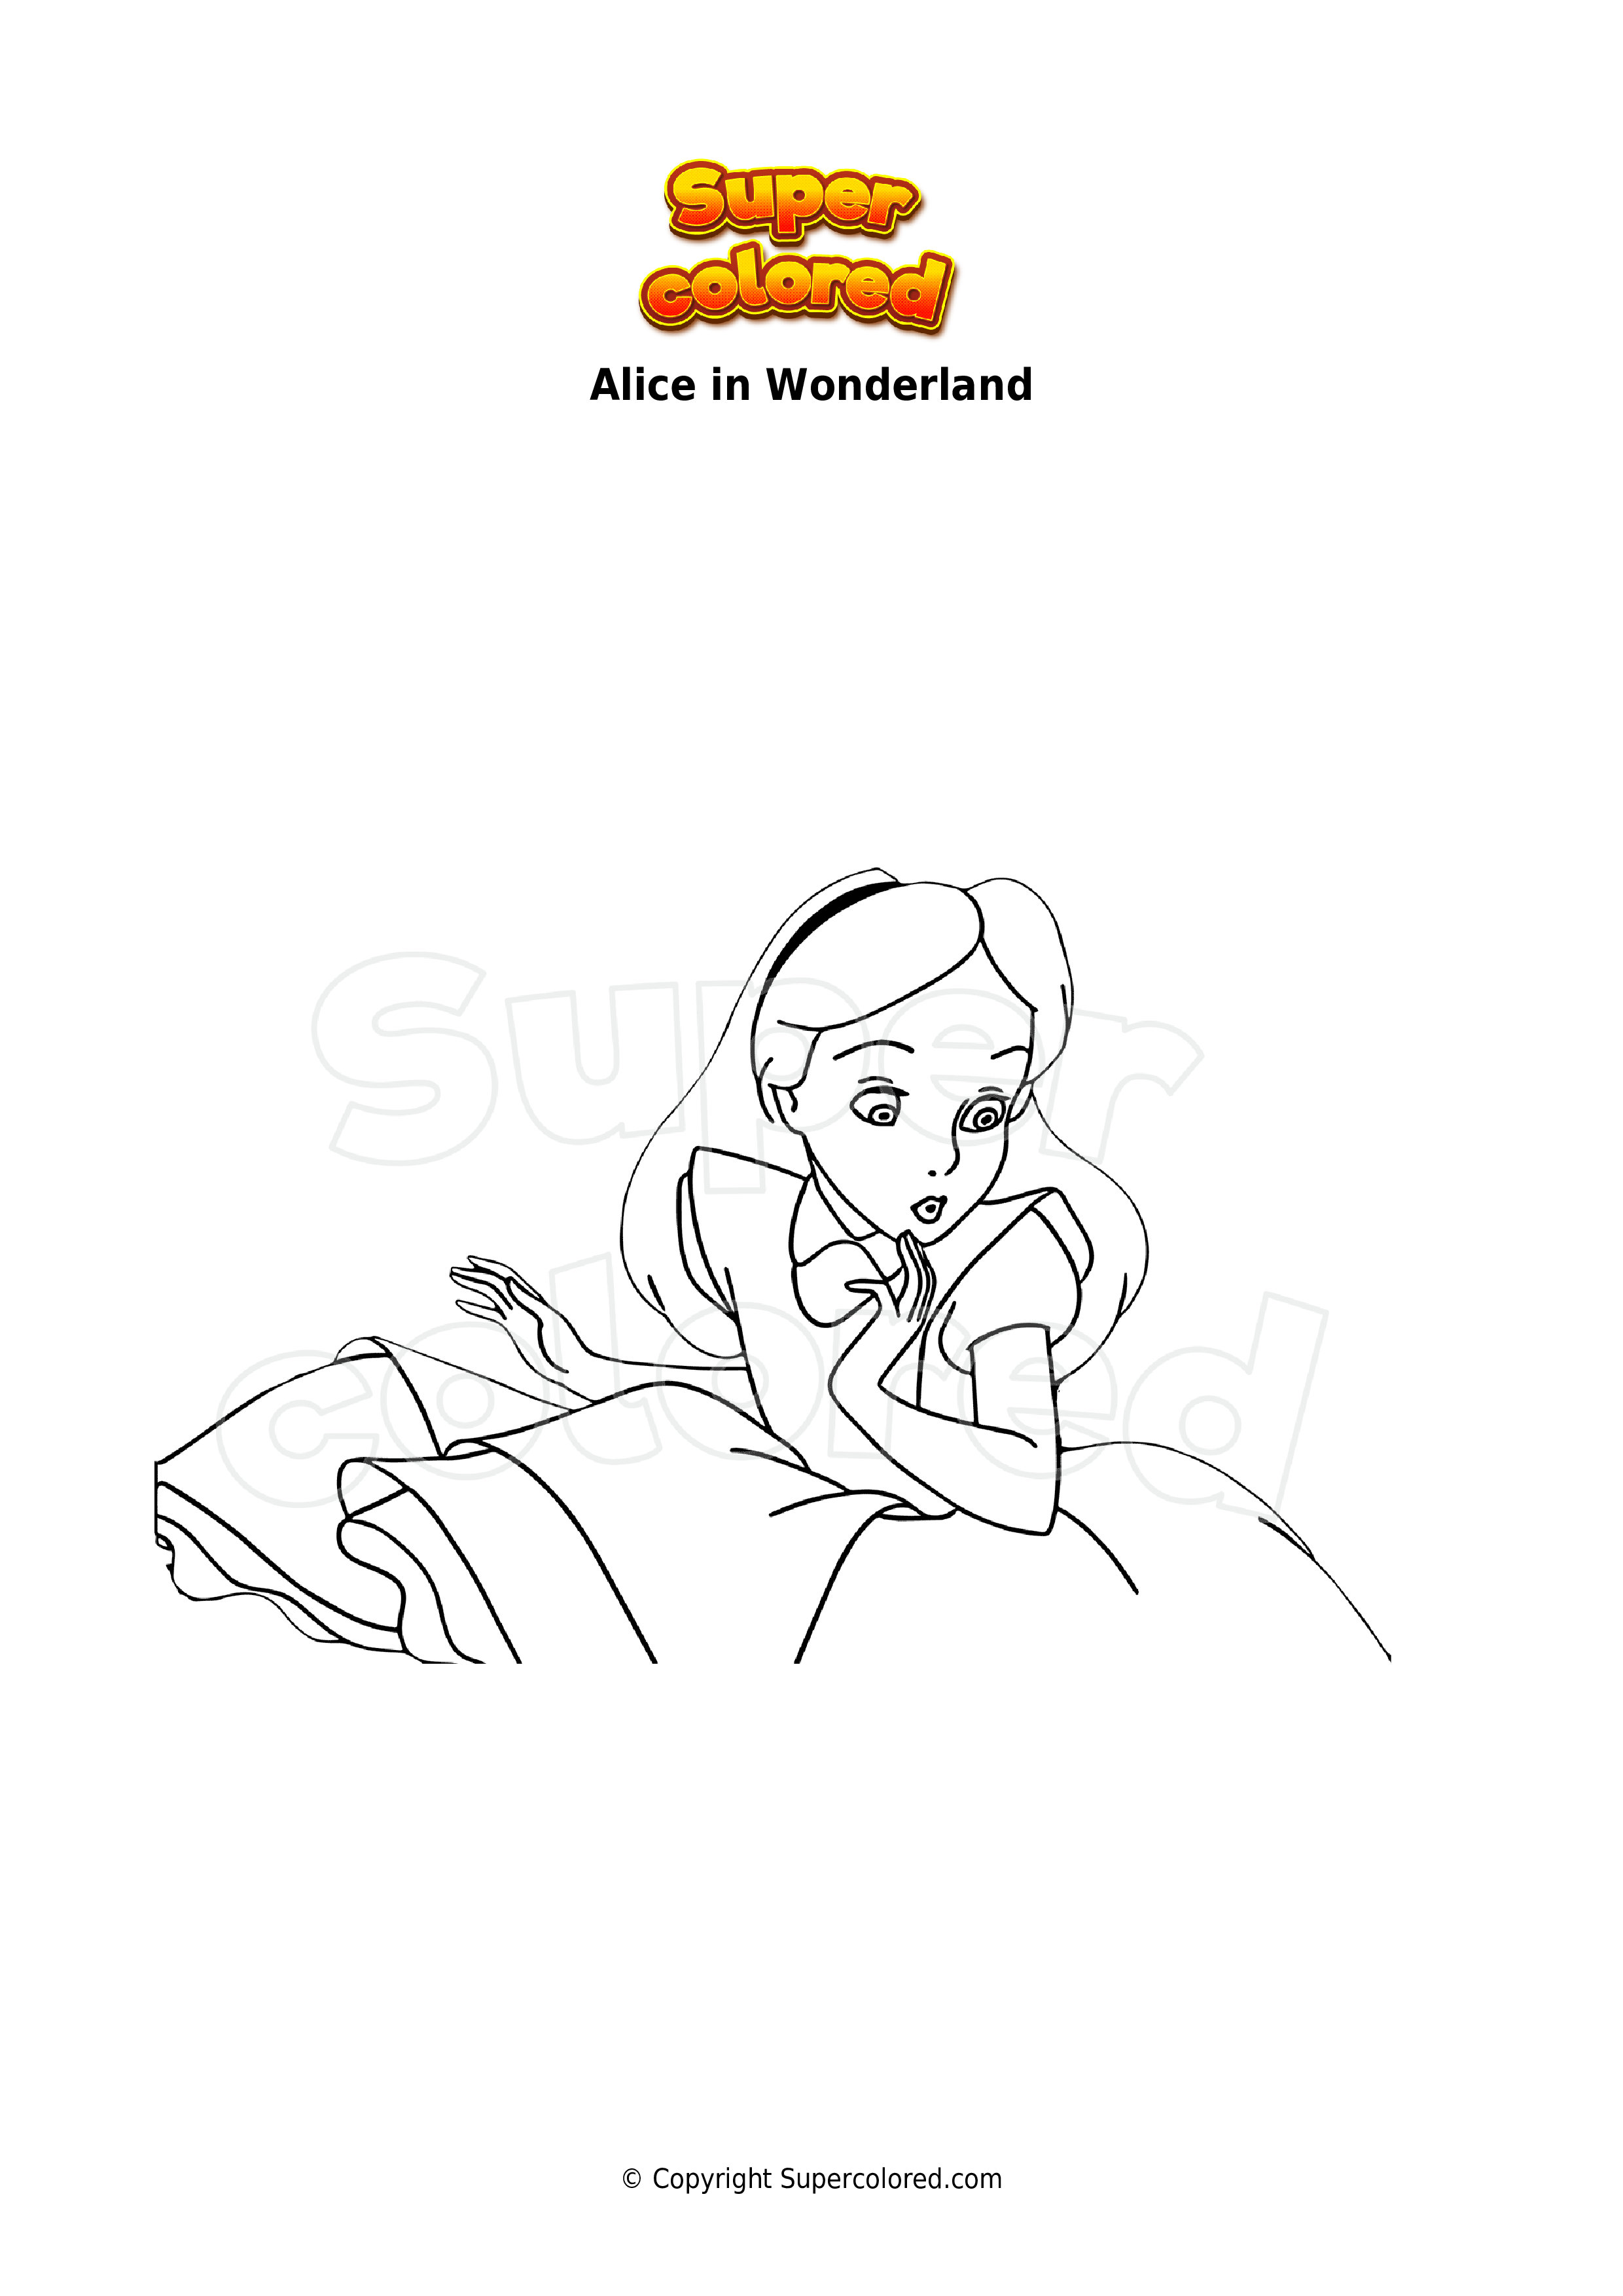 Coloring Page Alice In Wonderland Supercolored Com